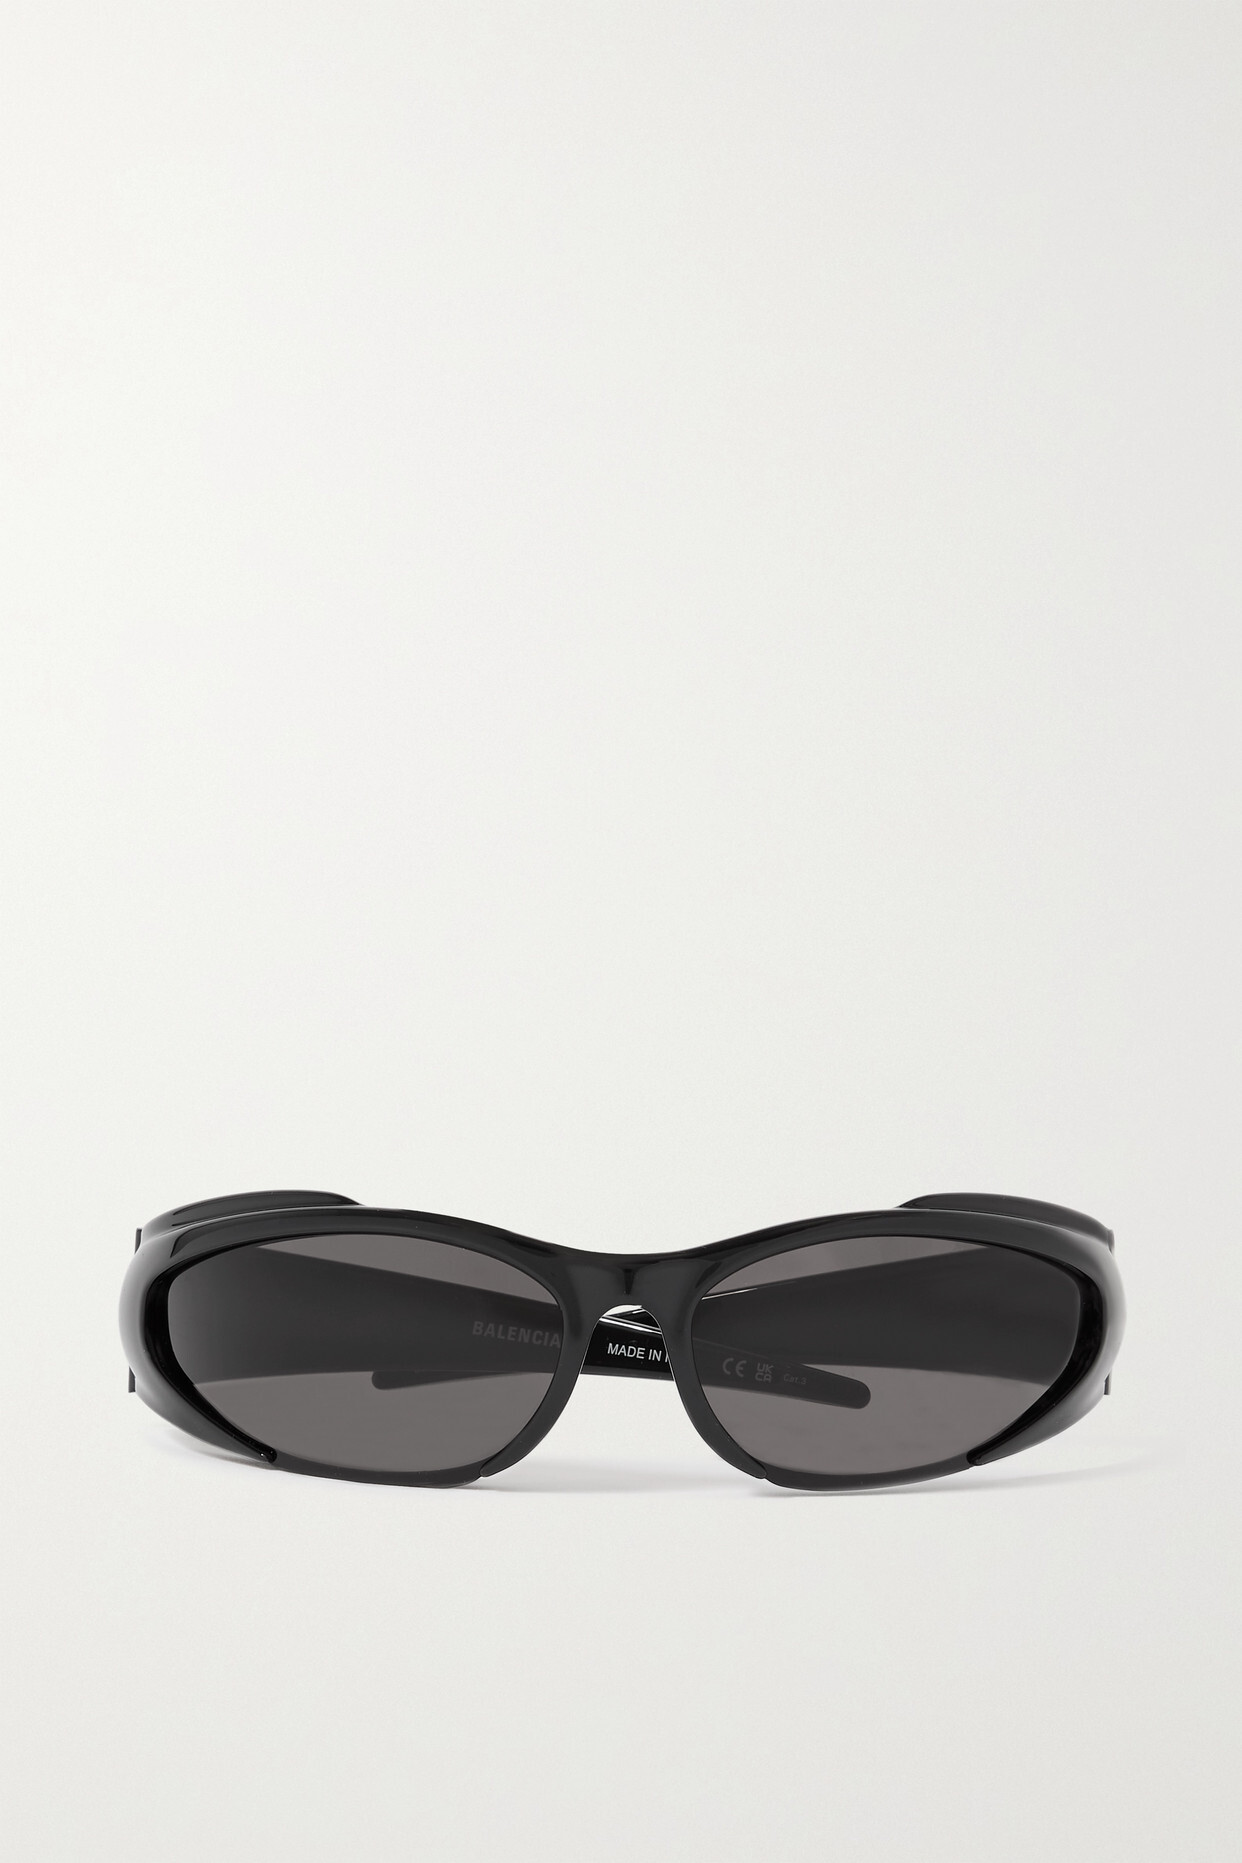 Balenciaga Eyewear - Cat-eye Acetate Sunglasses - Black